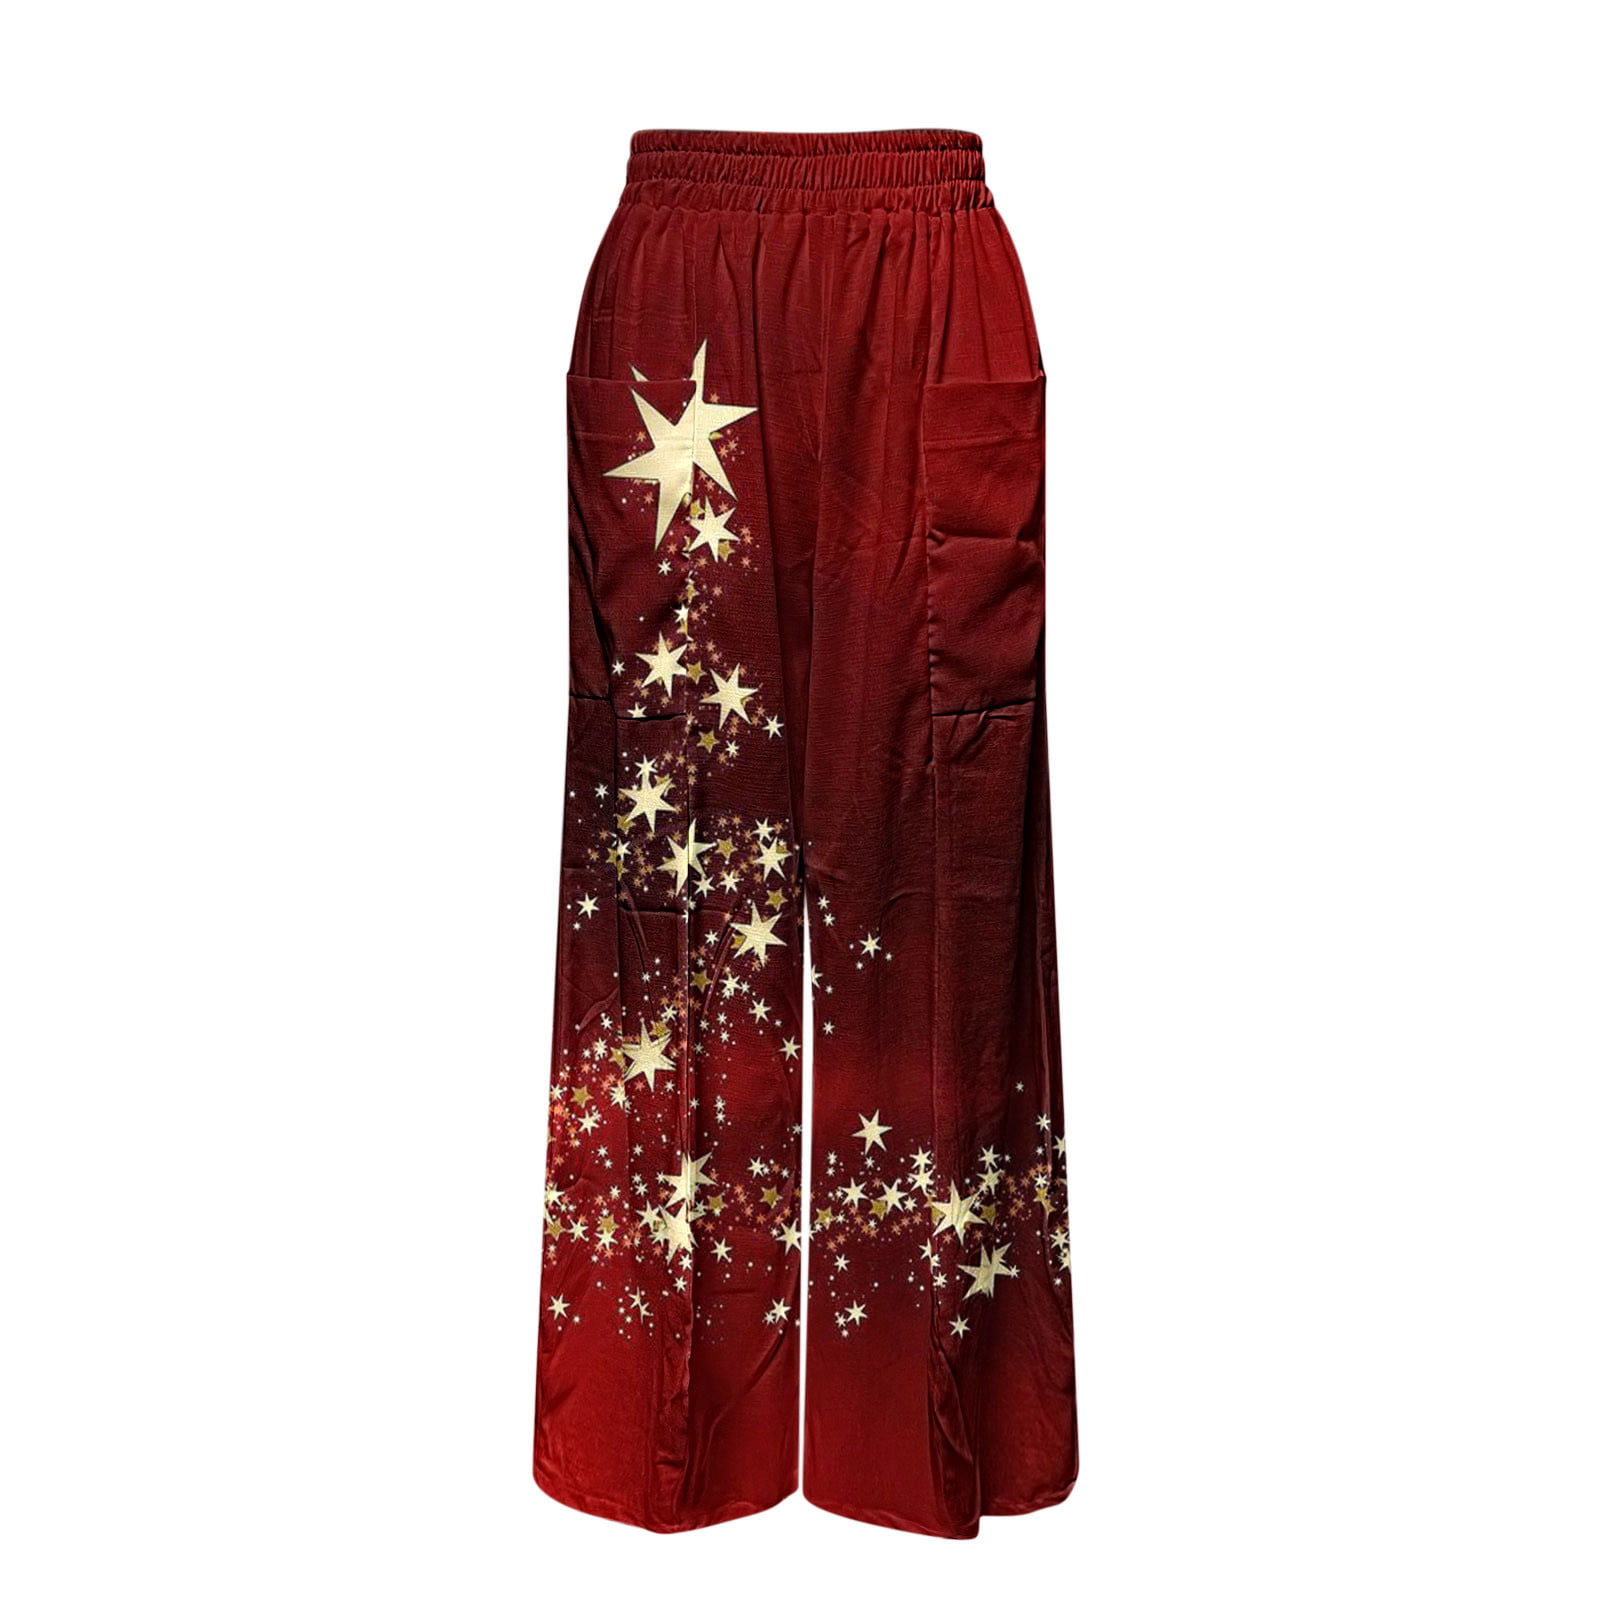 Fsqjgq Women's Casual Lantern Tapered Harem Pants White Pants Women Fashion  Loose Christmas Print Big Pockets Casual Bottoms Trousers Wide Straight-Leg  Pants Red Xxl 